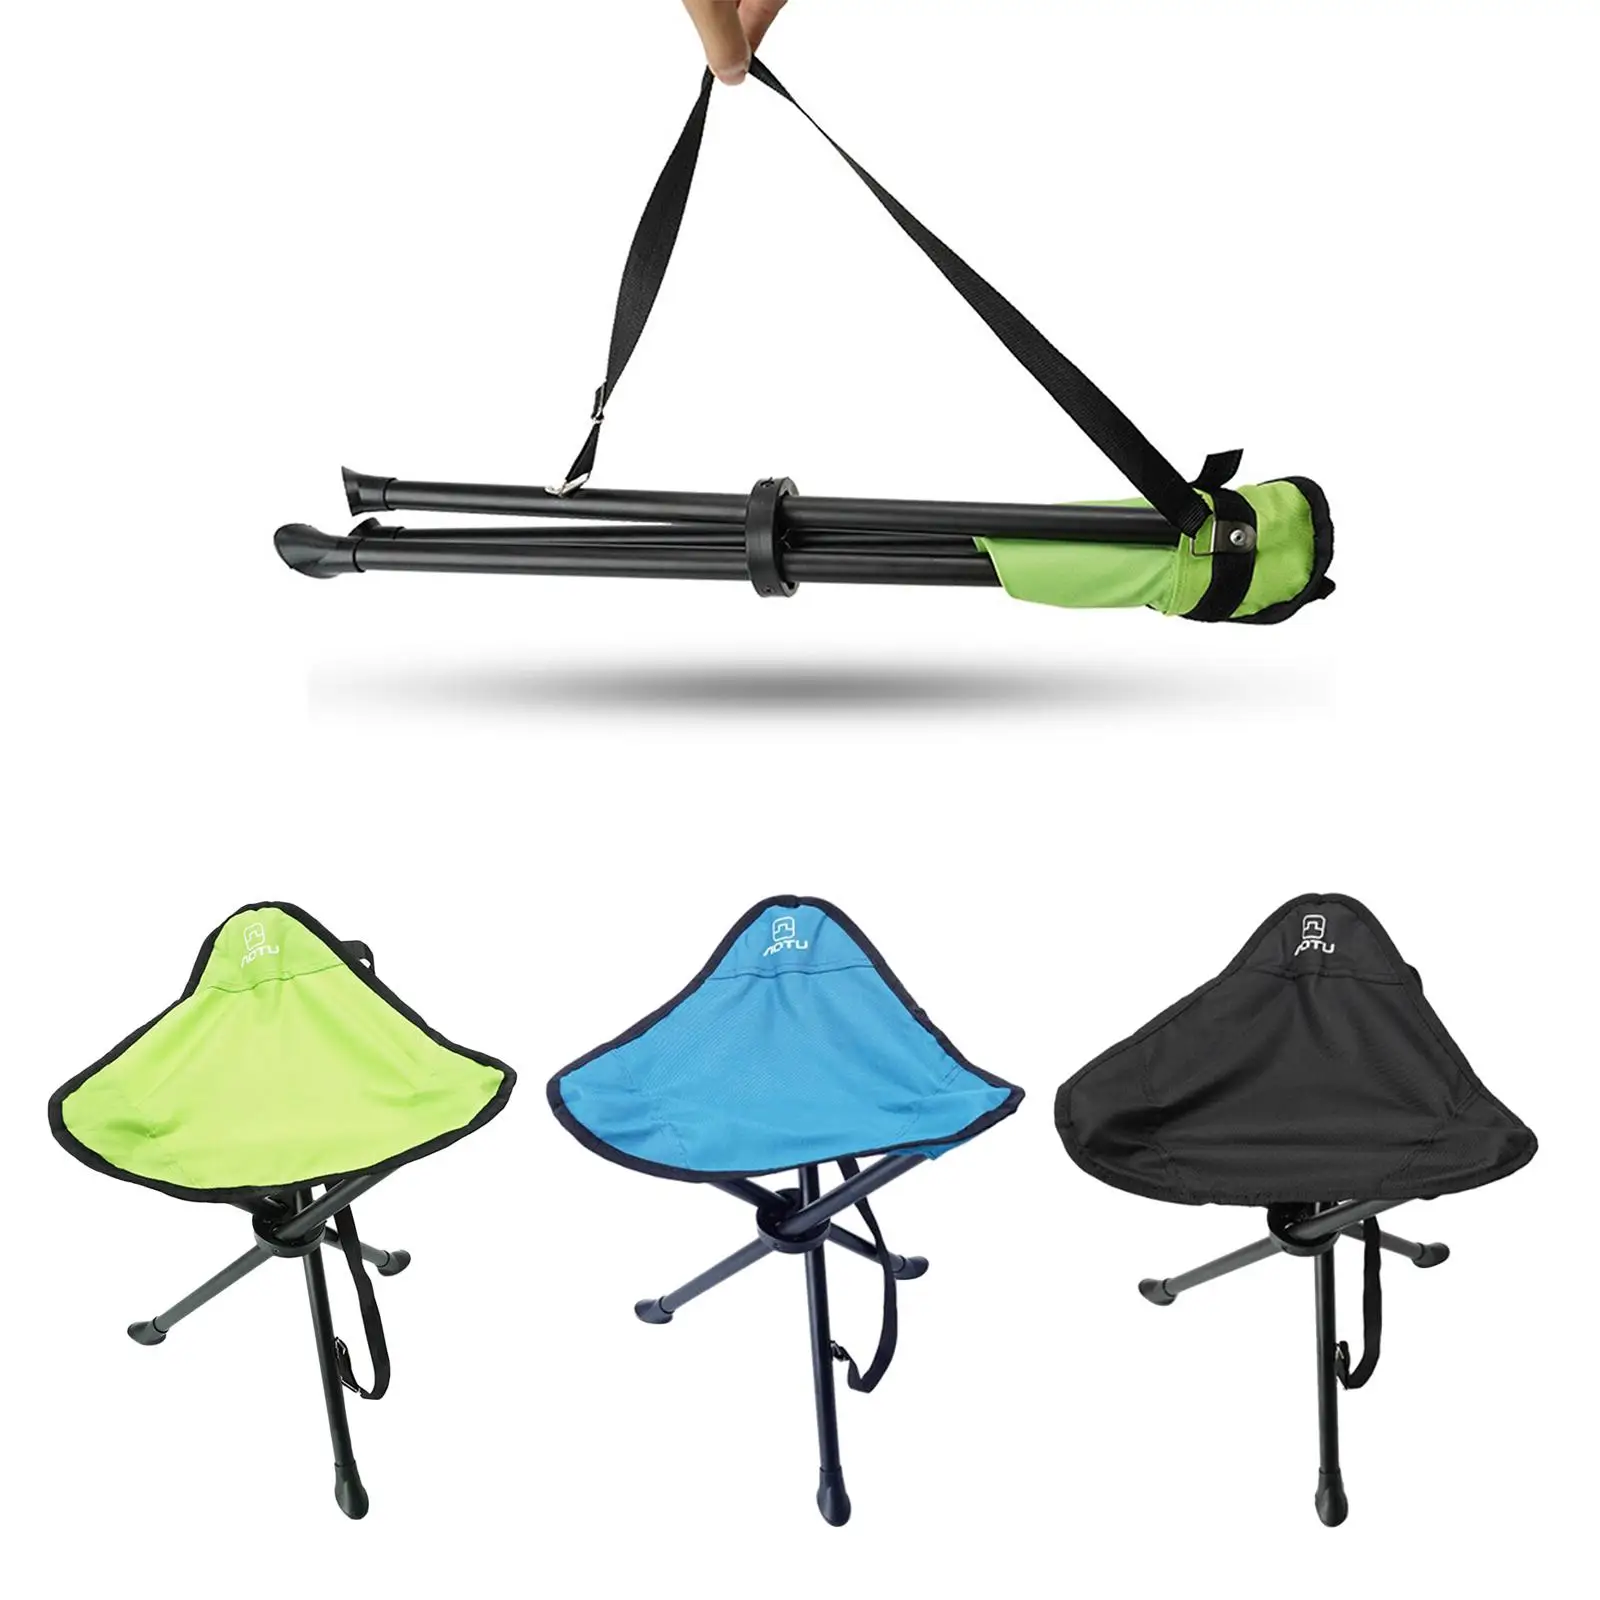 Camping Stool Folding, Lightweight 3 Legged Tripod Camp Stools Portable for Backpacking Hiking Fishing